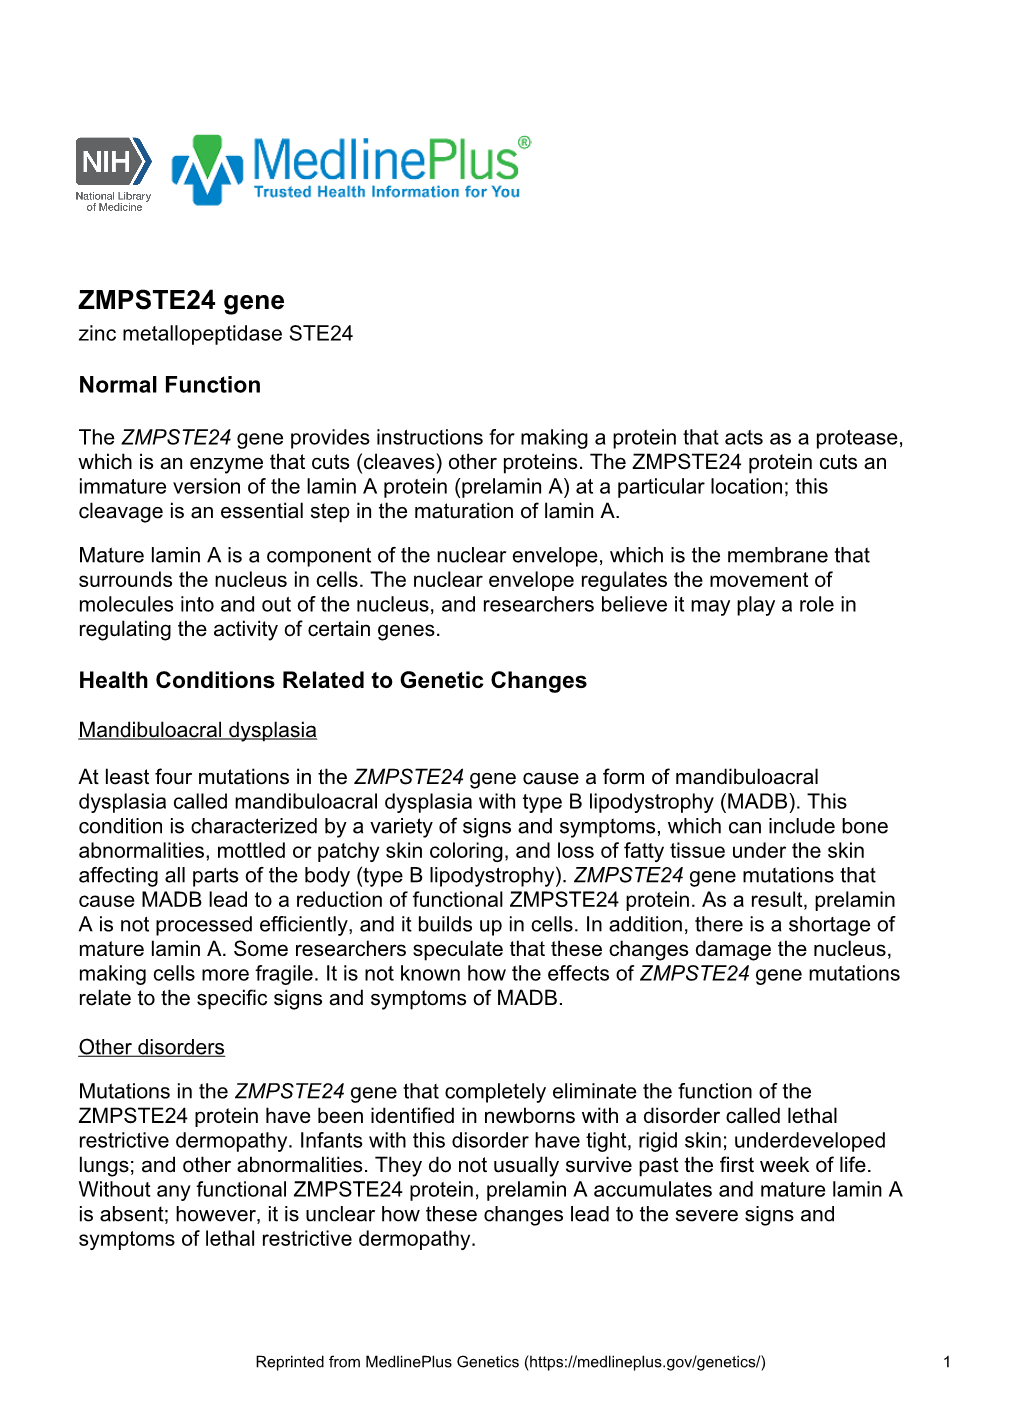 ZMPSTE24 Gene Zinc Metallopeptidase STE24